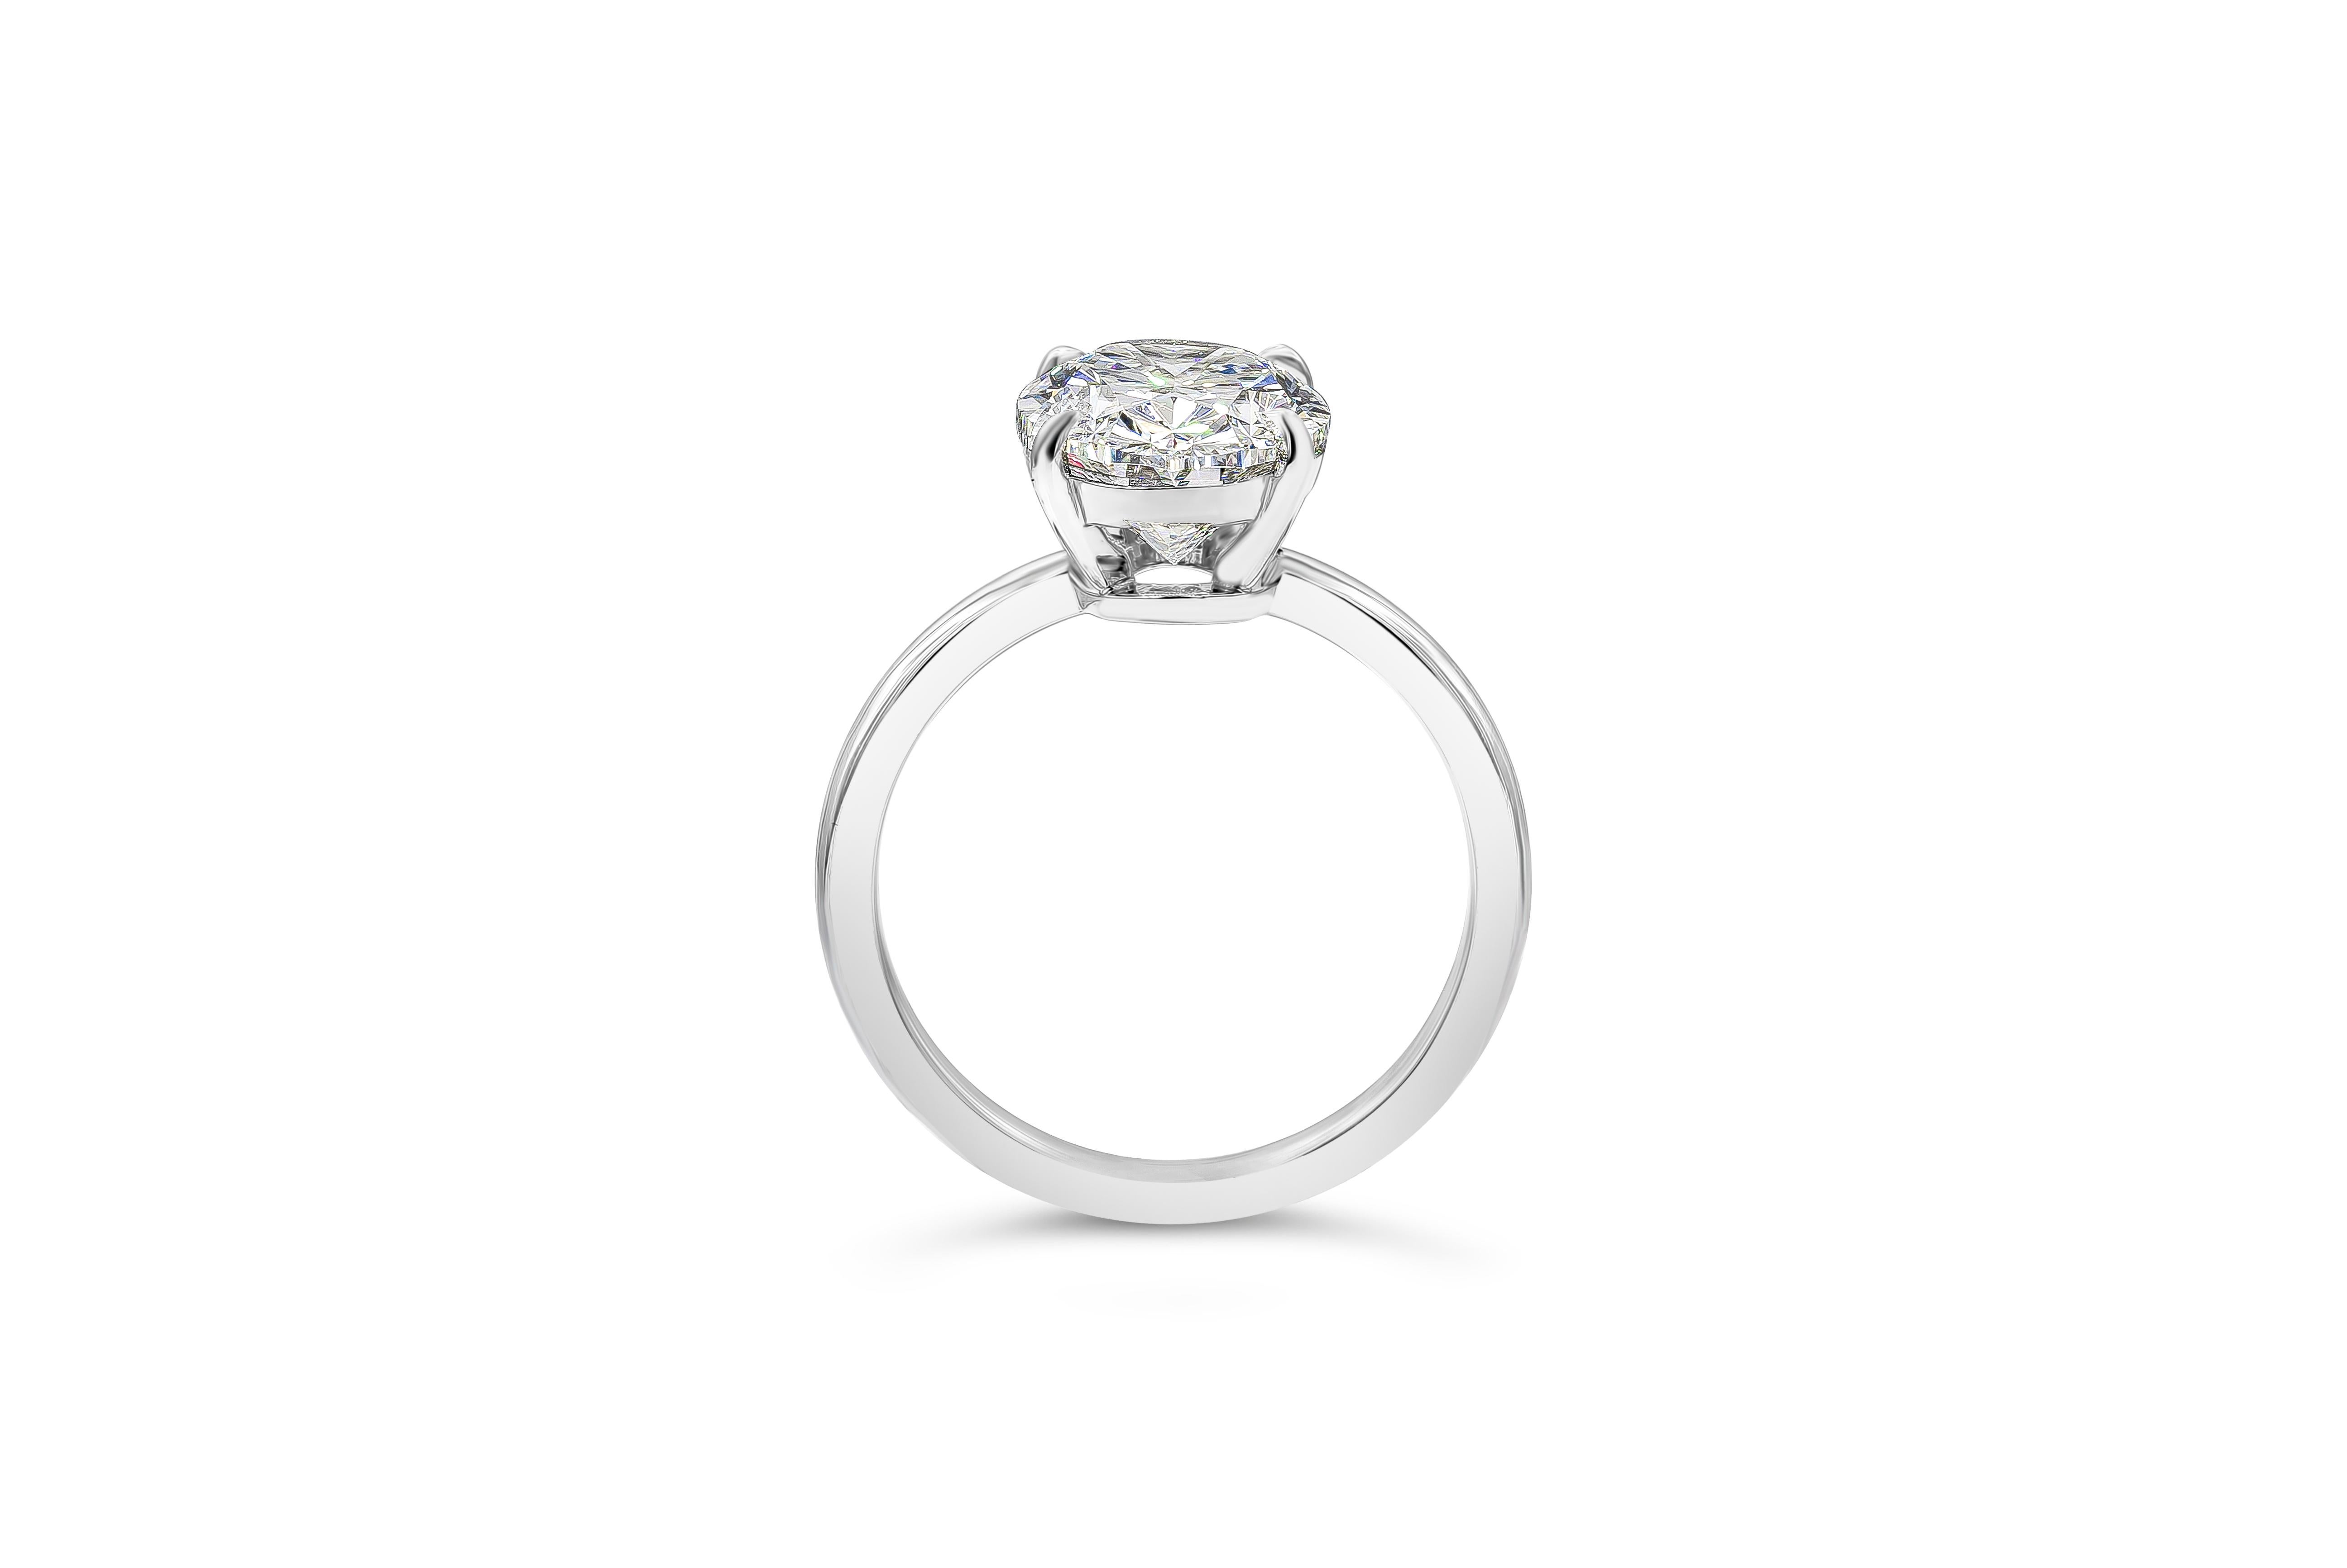 3.50 carat diamond ring